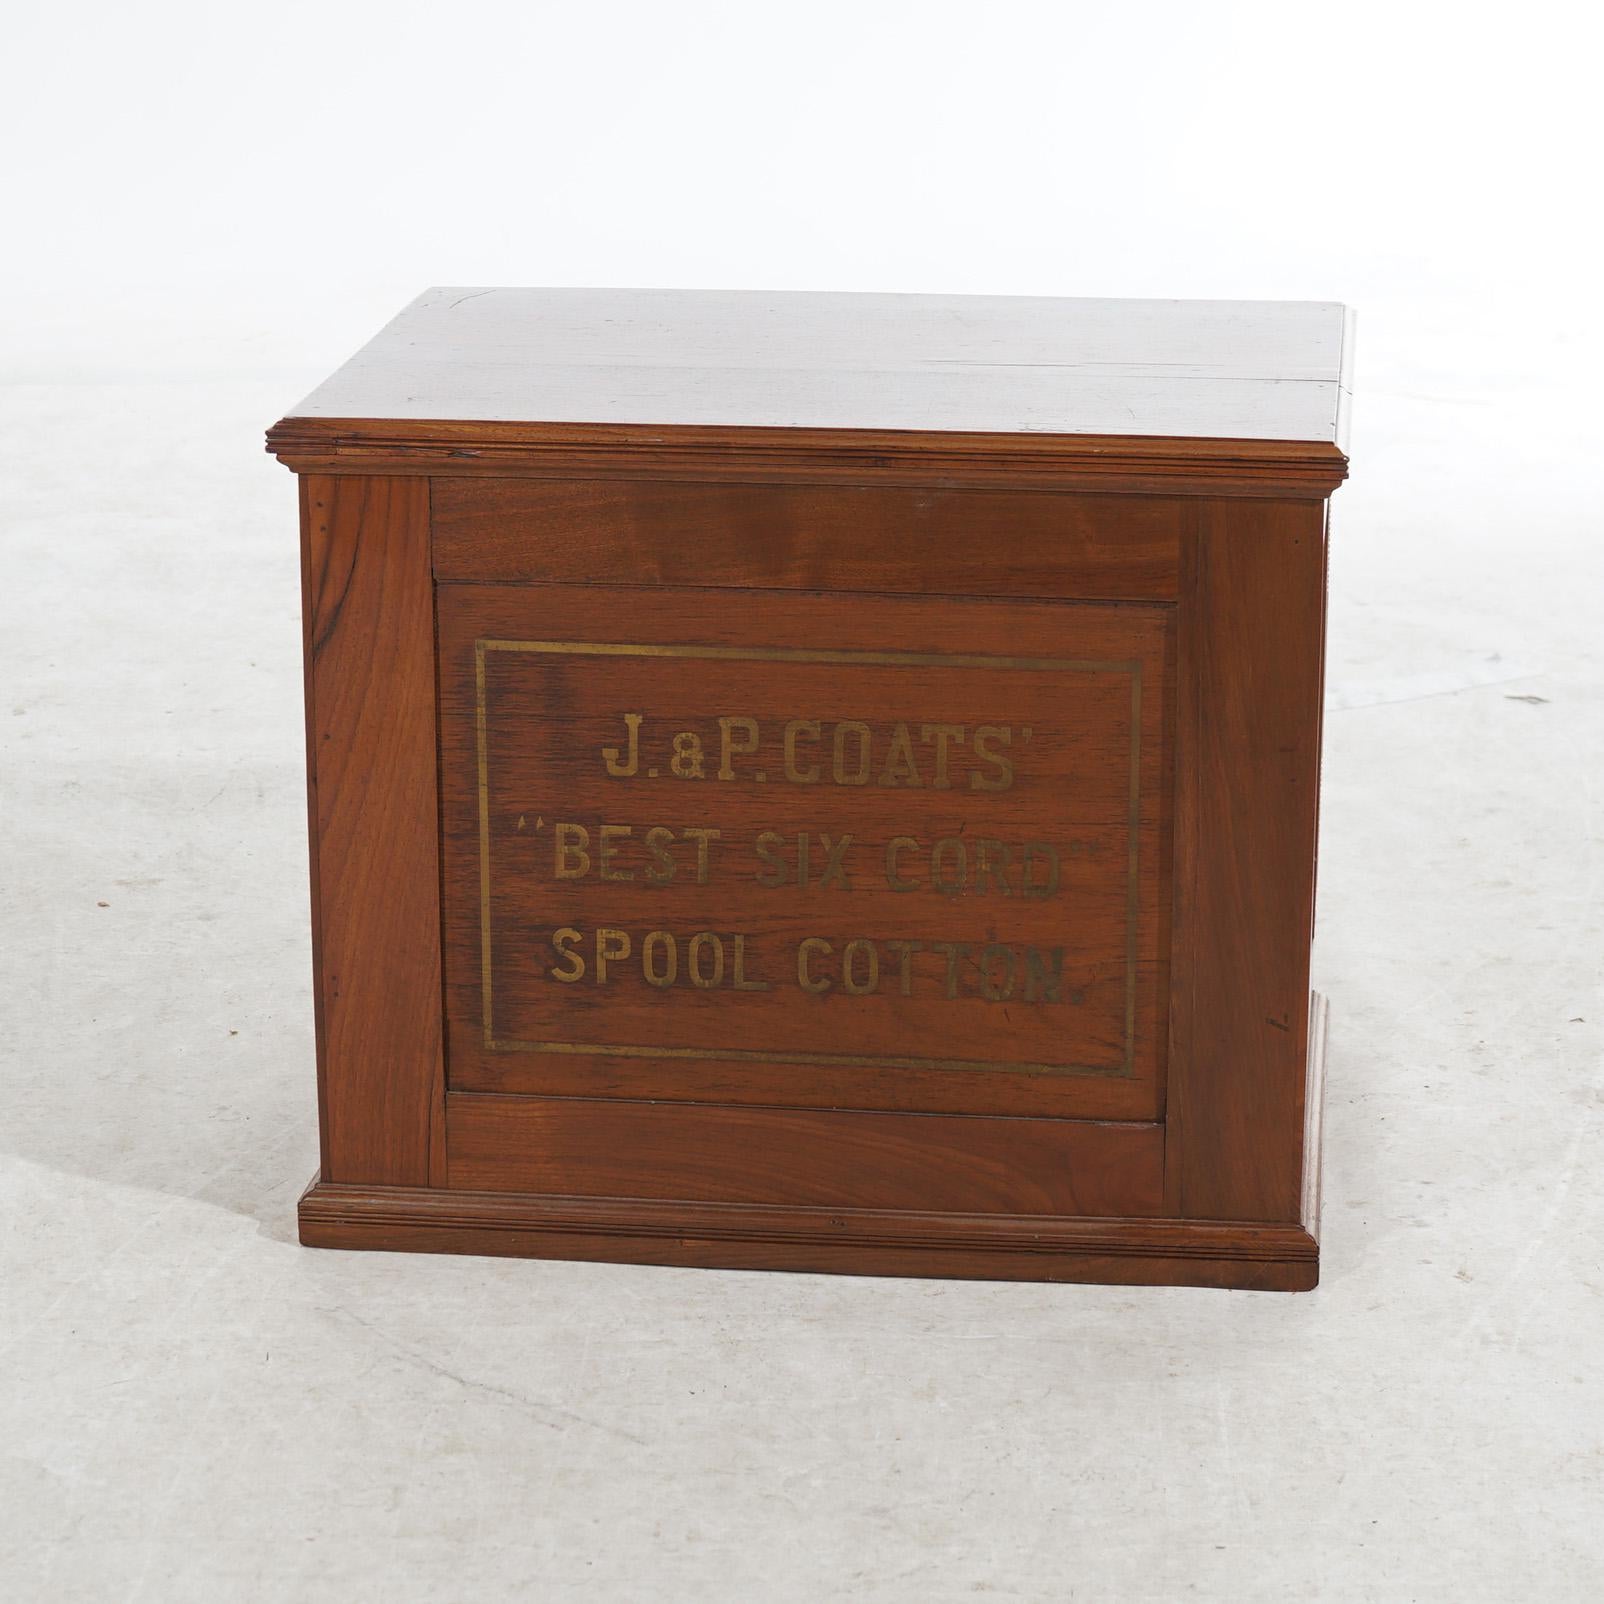 j p coats antique spool cabinet